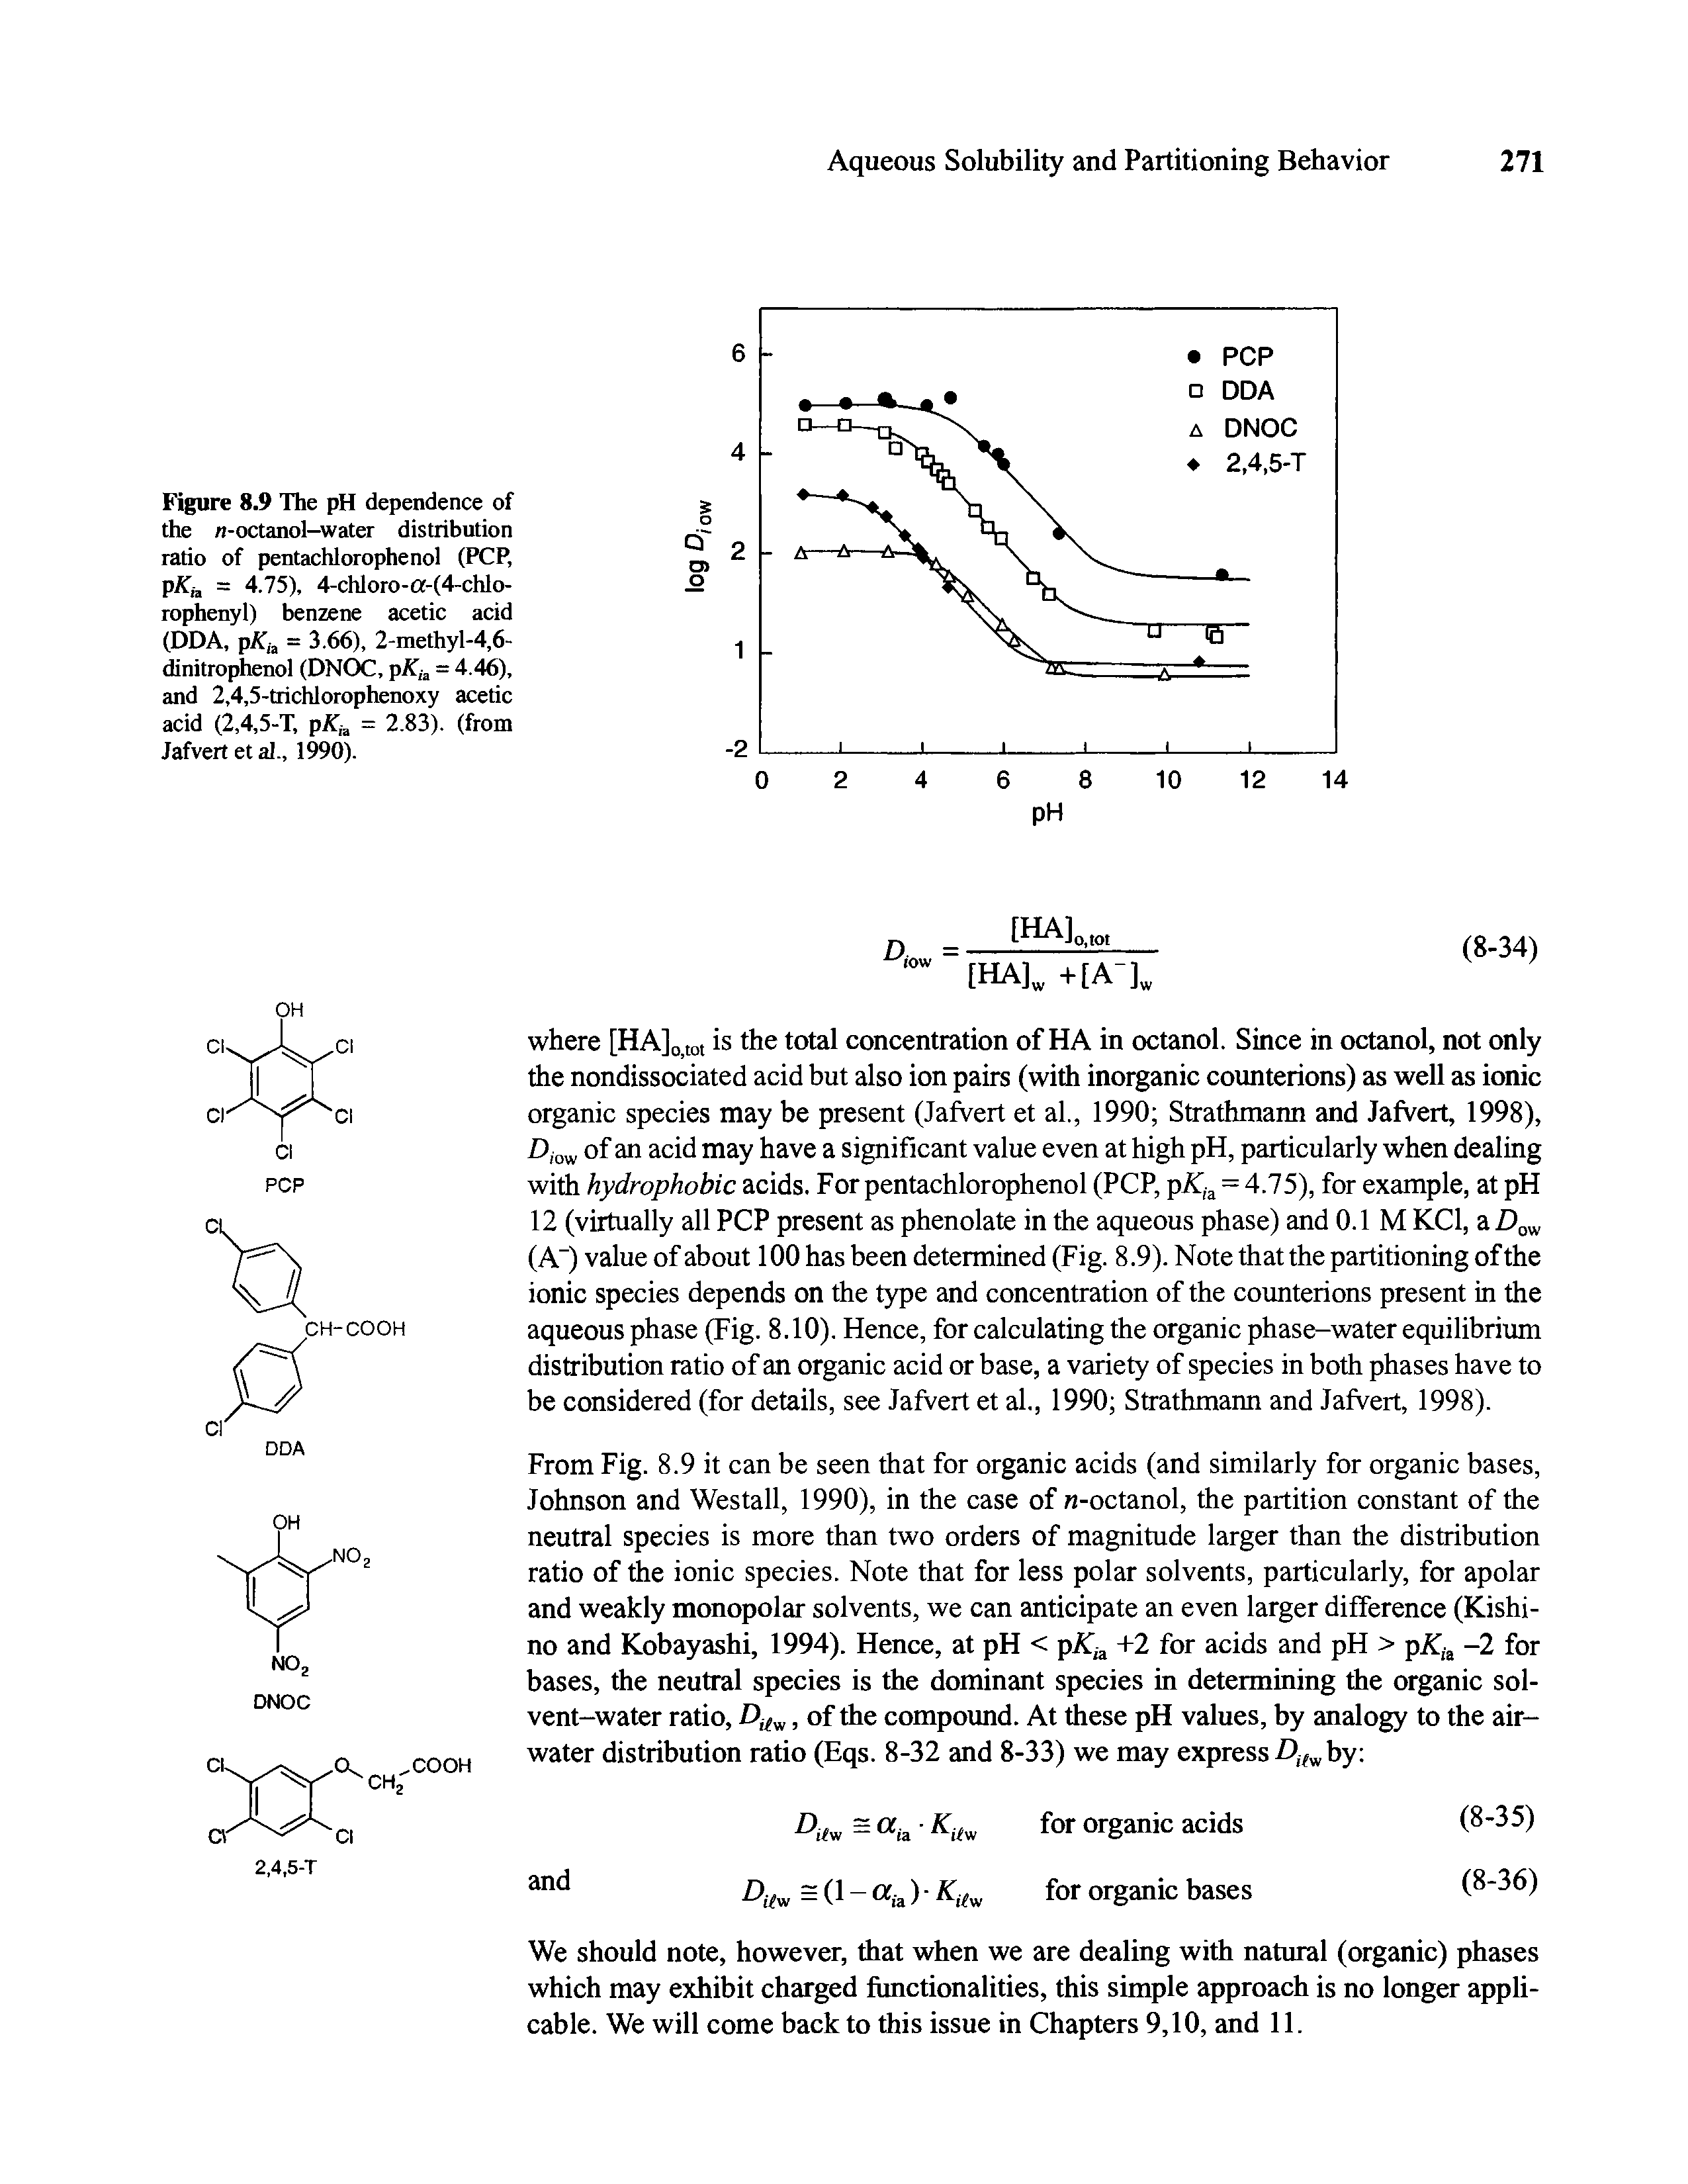 Figure 8.9 The pH dependence of the /z-octanol-water distribution ratio of pentachlorophenol (PCP, pKj = 4.75), 4-chloro-a-(4-chlo-rophenyl) benzene acetic acid (DDA, pKb = 3.66), 2-methyl-4,6-dinitrophenol (DNOC, pKia = 4.46), and 2,4,5-trichlorophenoxy acetic acid (2,4,5-T, pKia = 2.83). (from Jafvert et al., 1990).